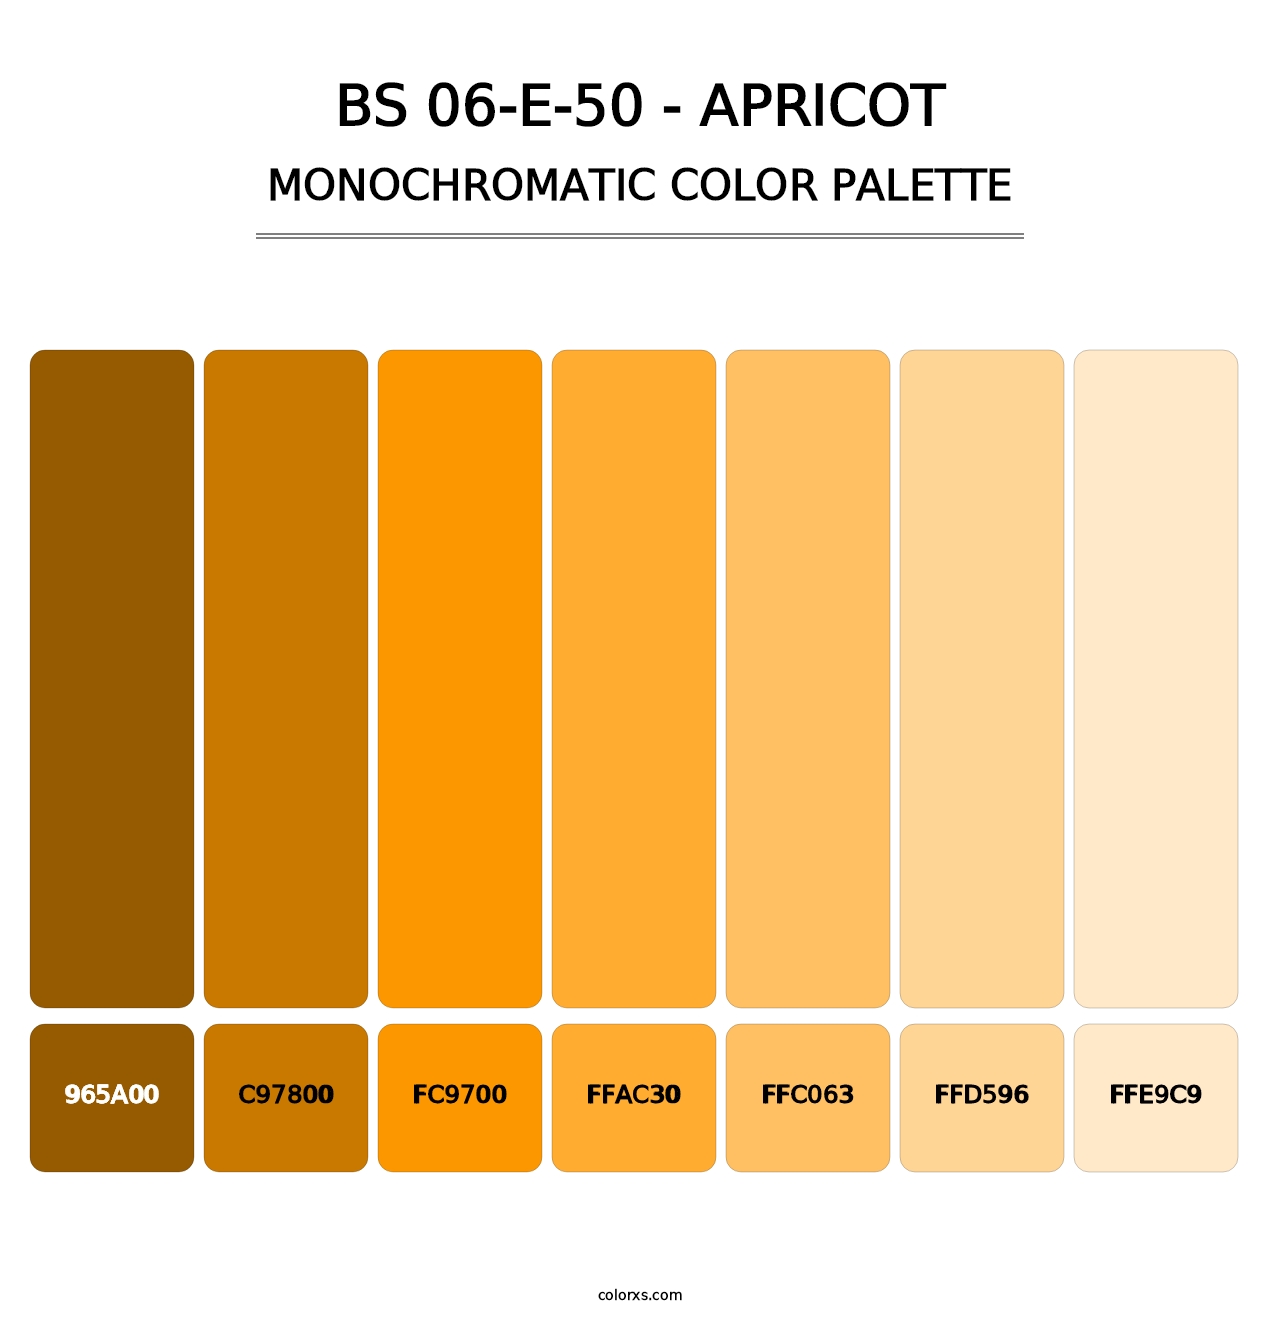 BS 06-E-50 - Apricot - Monochromatic Color Palette